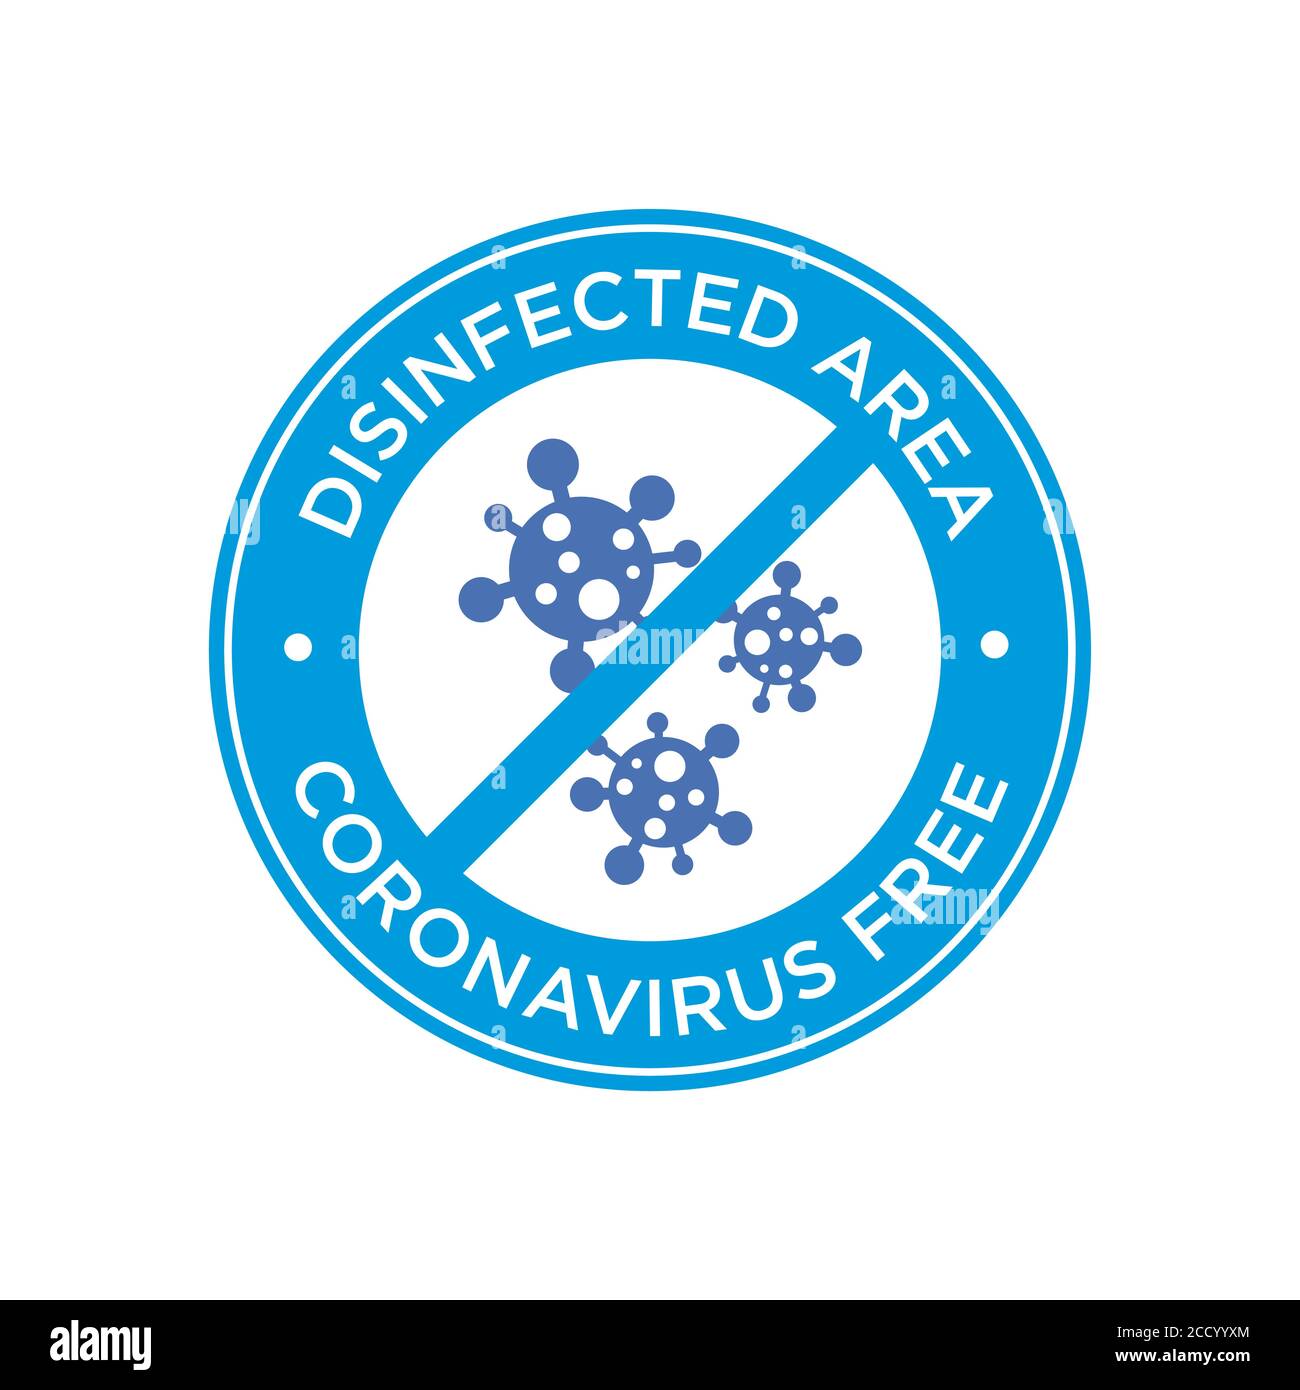 Round symbol for disinfected area of covid-19. Coronavirus free area icon. Stock Vector